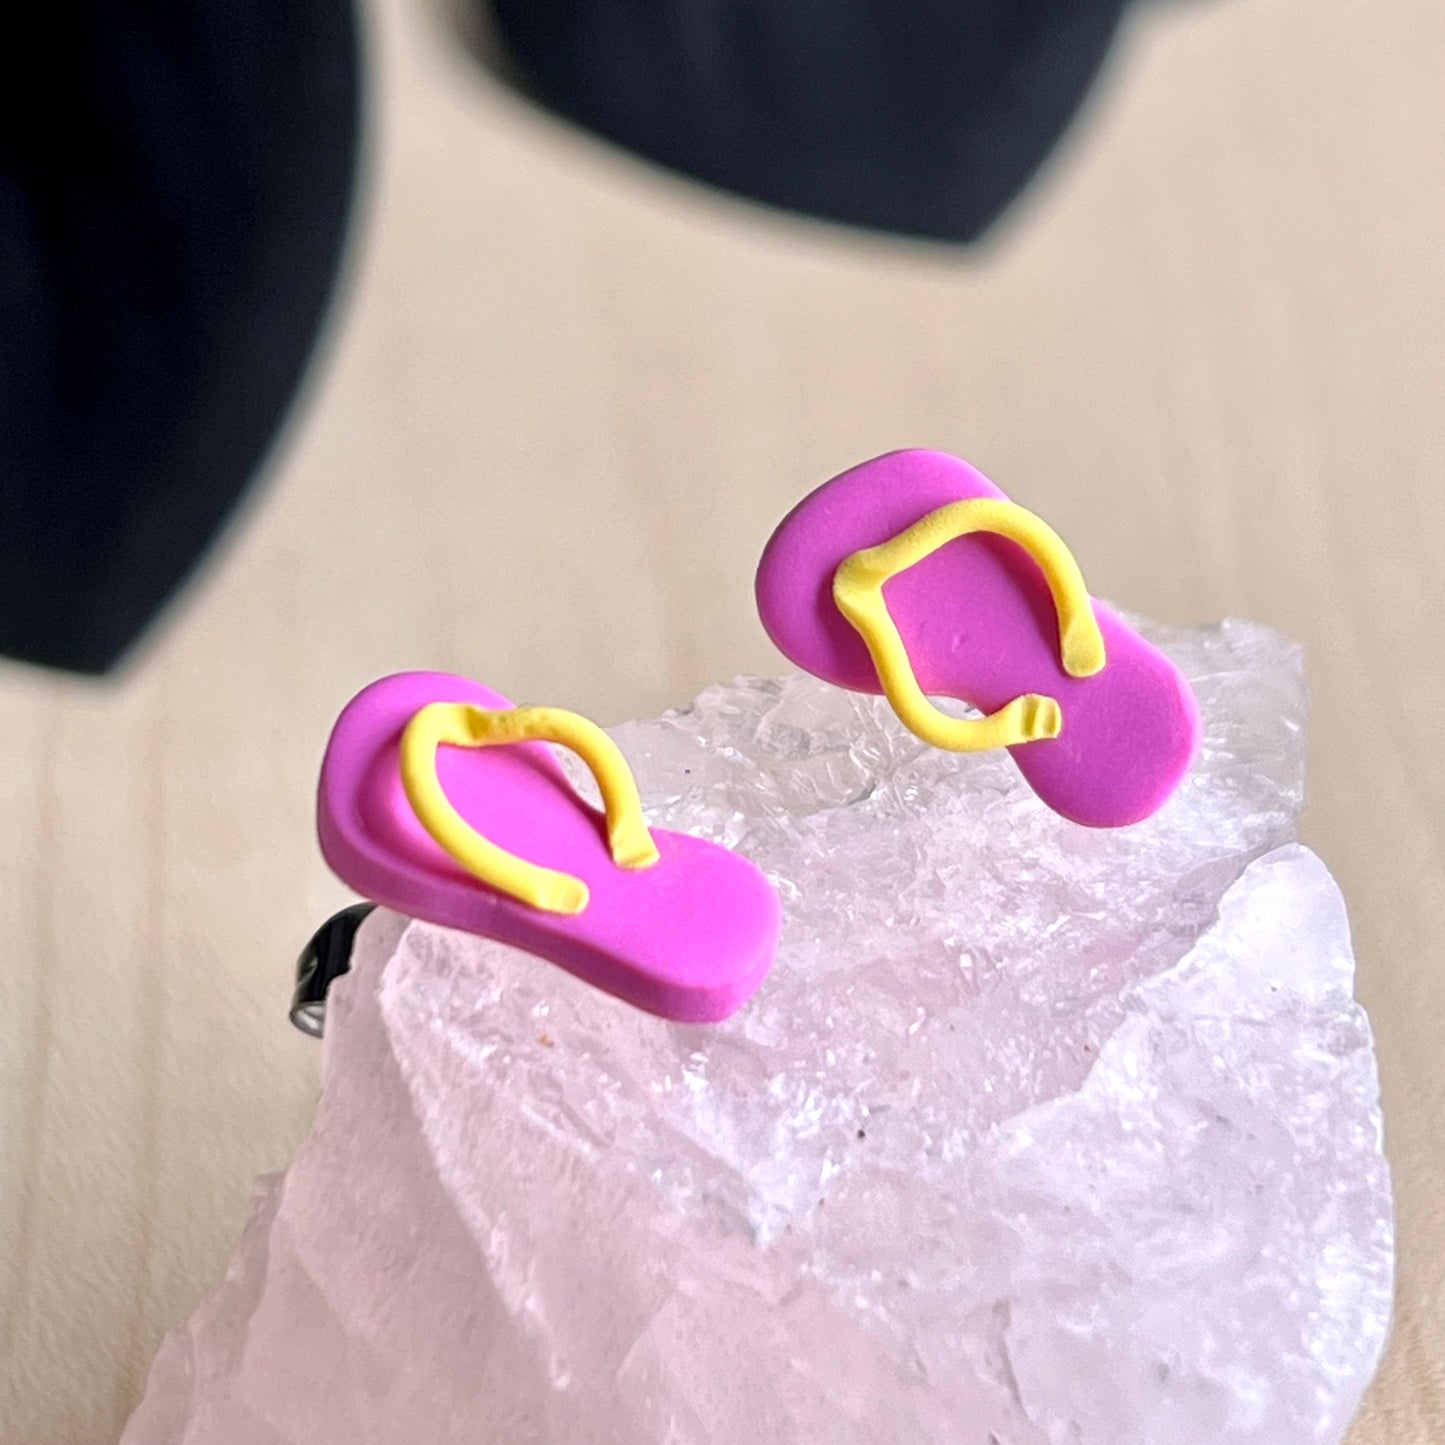 Thongs / flip flops studs, pink with yellow, handmade earrings